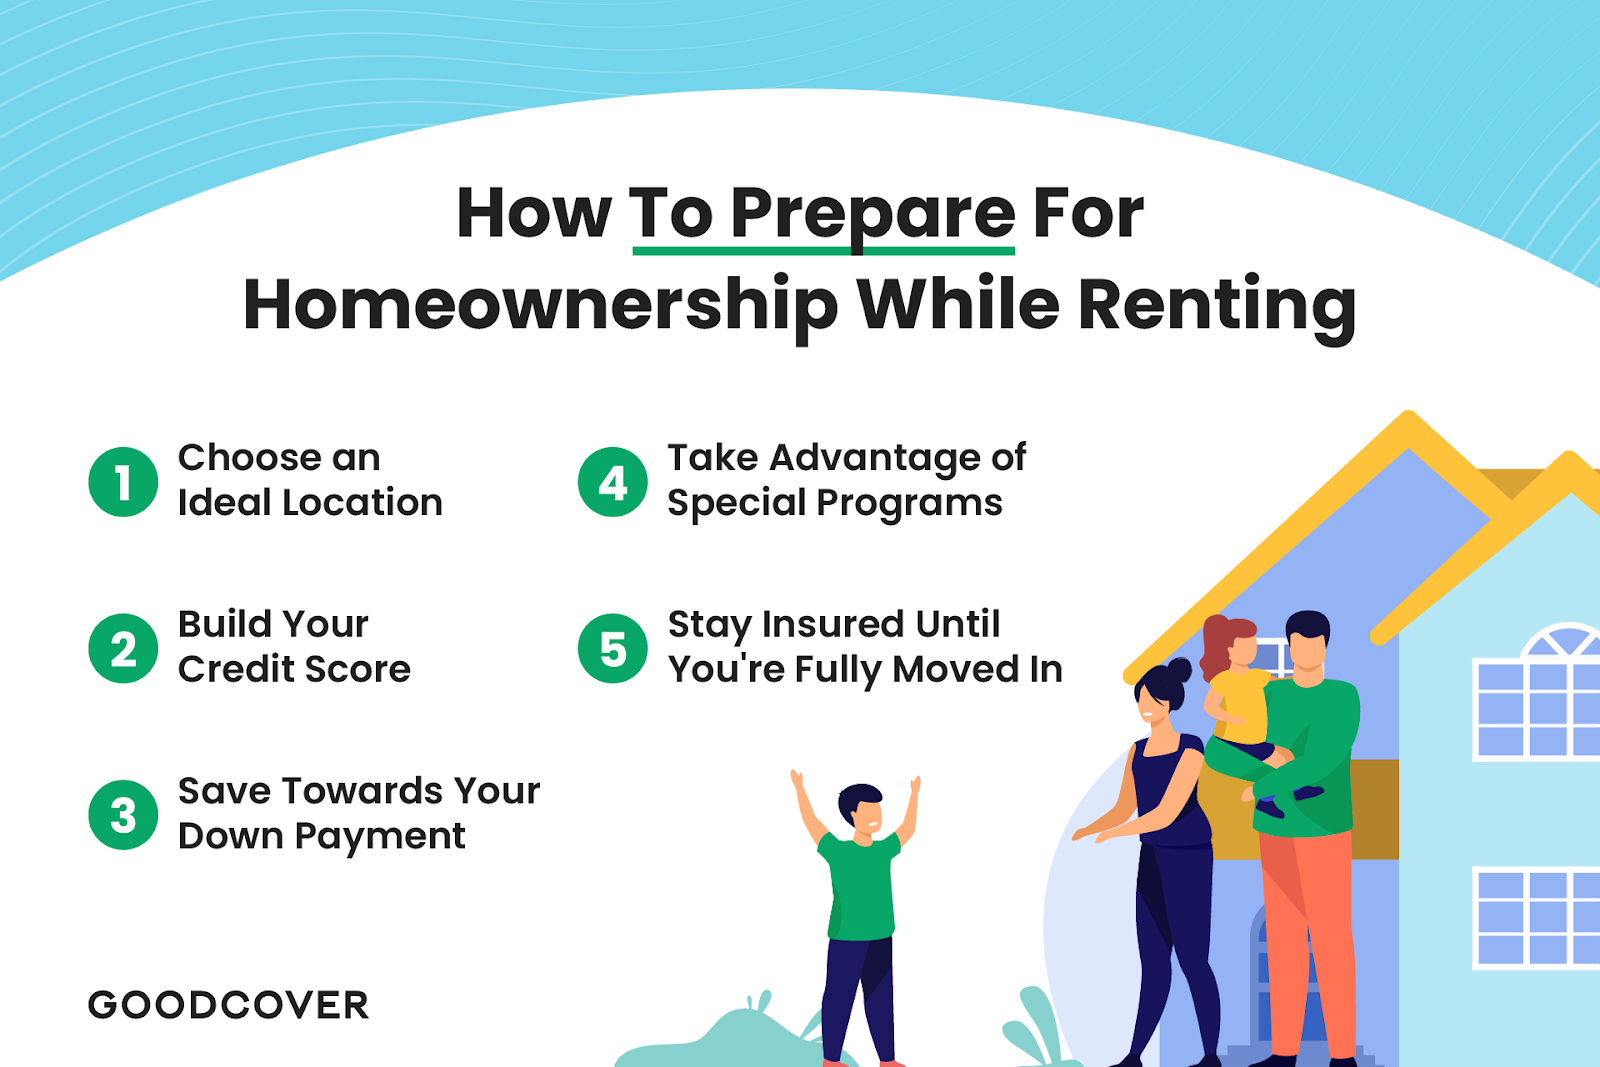 Tips for preparing for homeownership